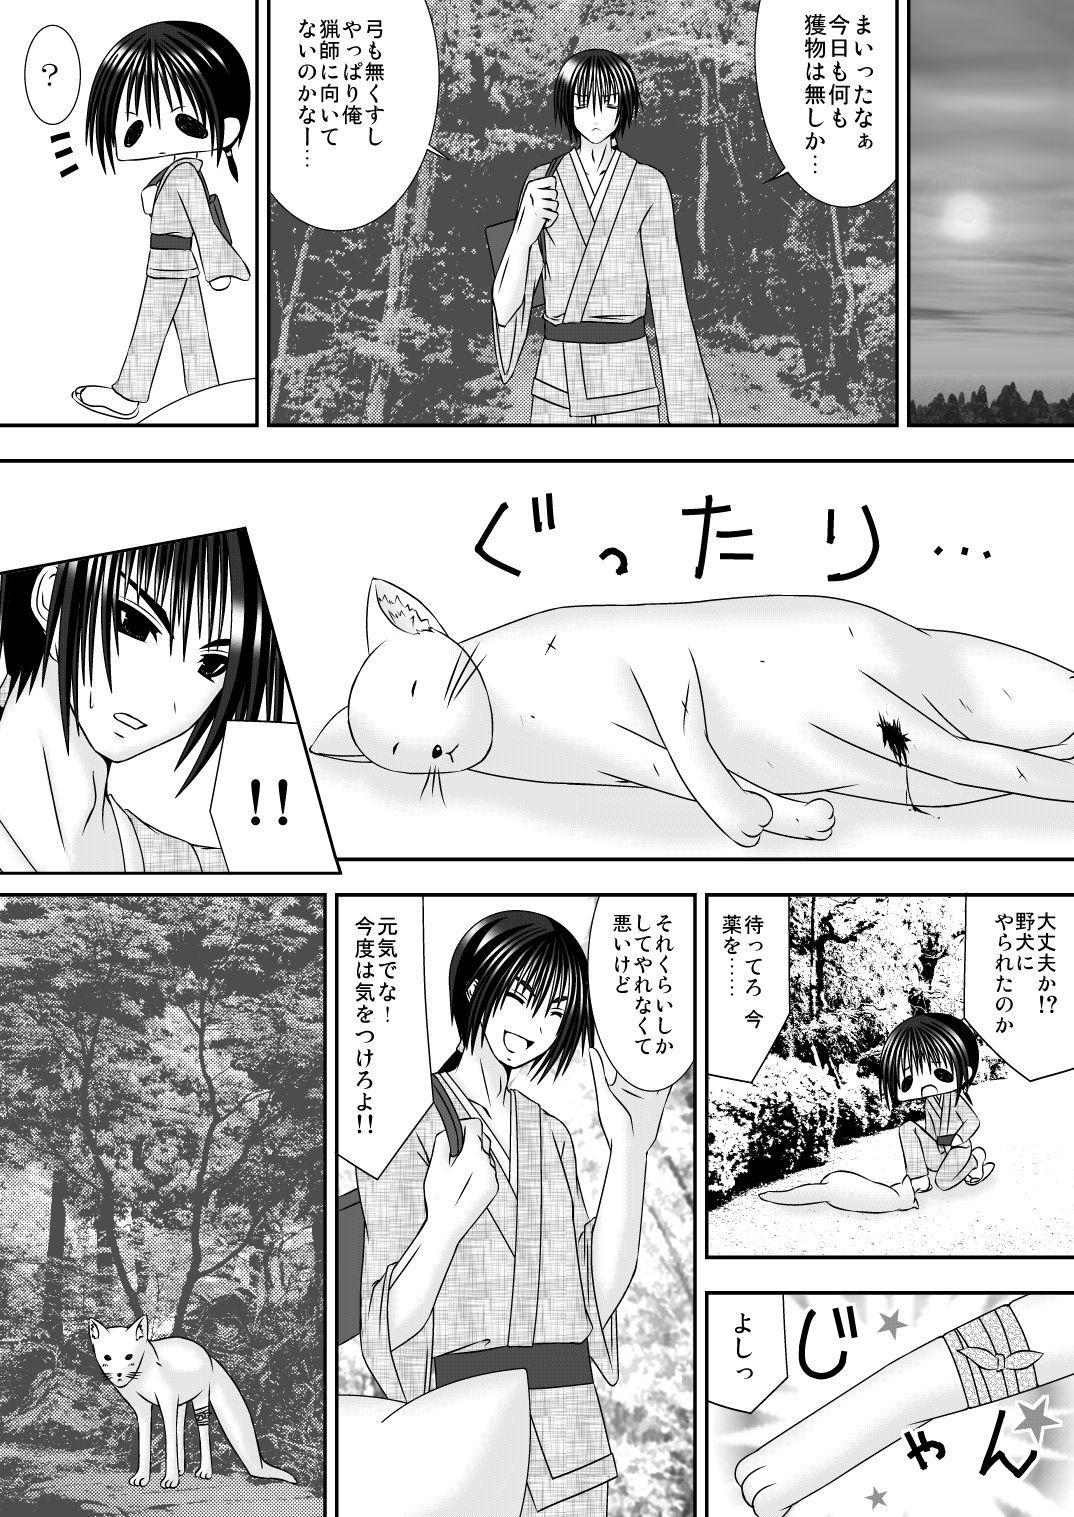 Mamada Kitsune no Yomego Jocks - Page 2